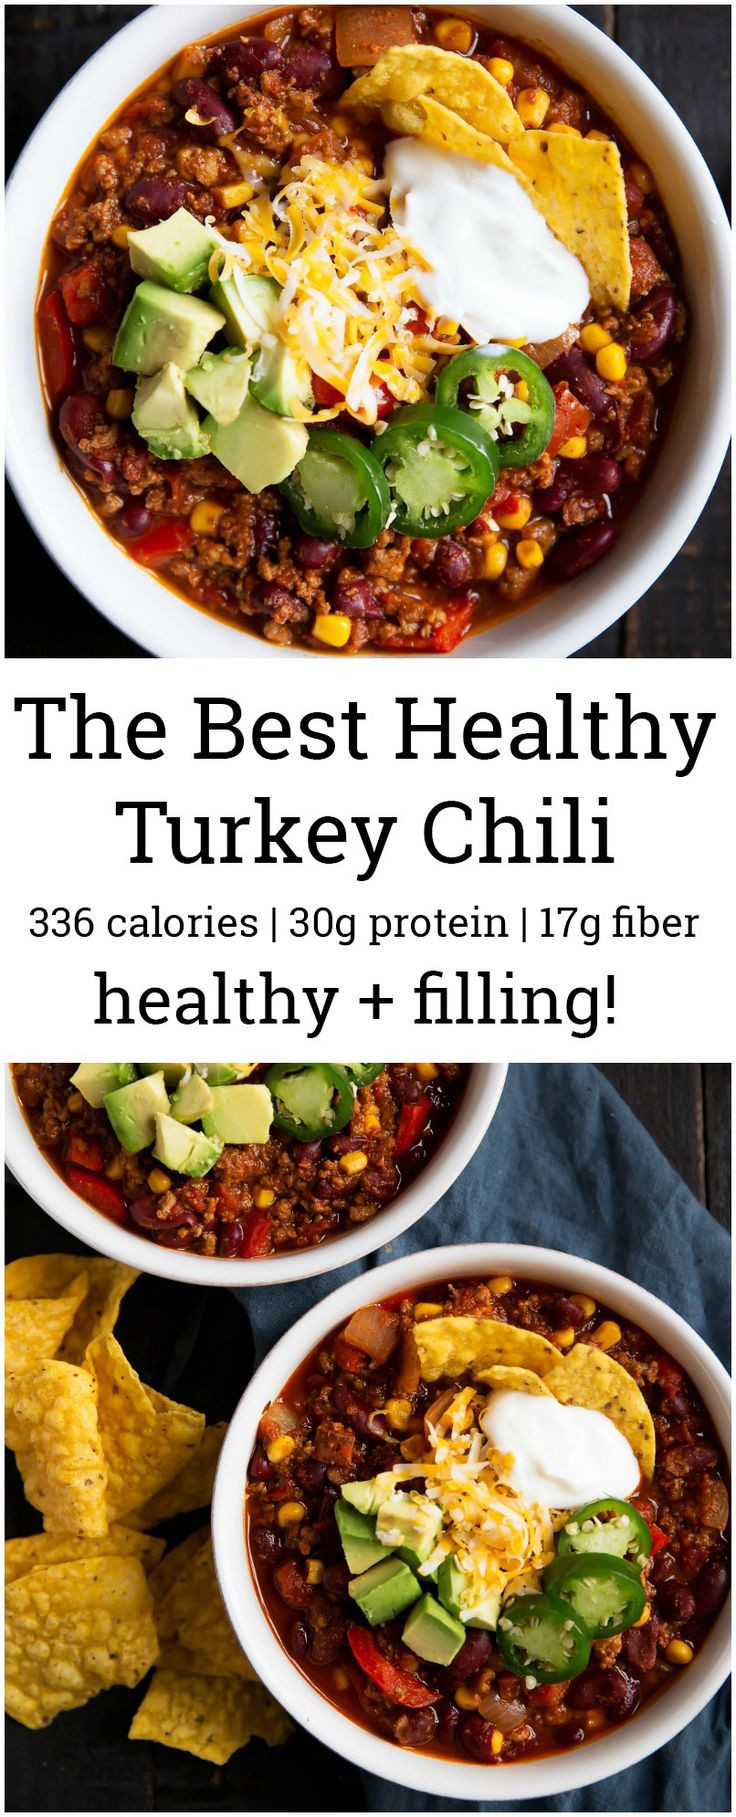 Heart Healthy Thanksgiving Recipes
 100 Heart healthy recipes on Pinterest